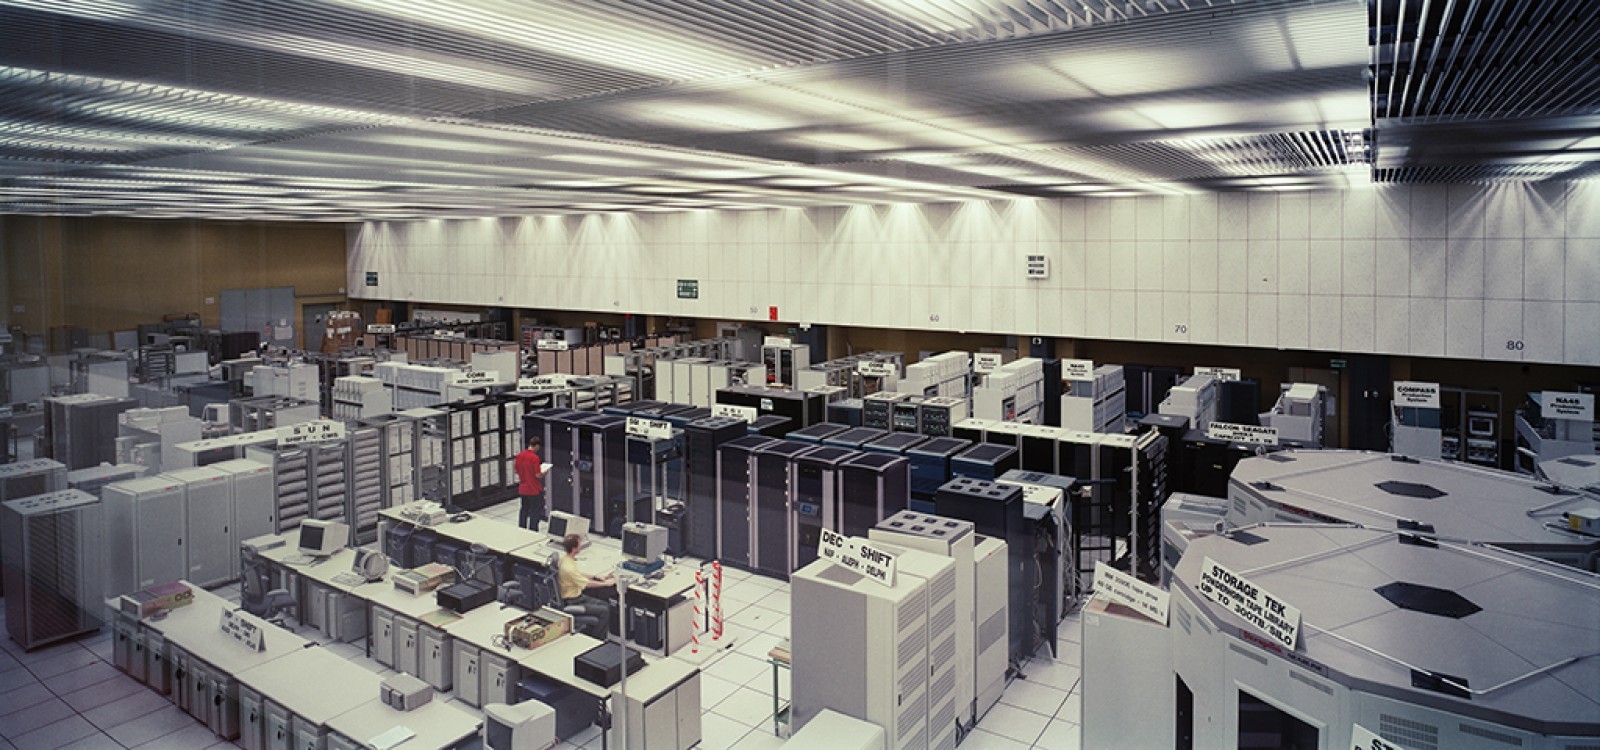 CERN (European Organization for Nuclear Research), computer rooms, 2000 Geneva, Switzerland © Armin Linke, 2000